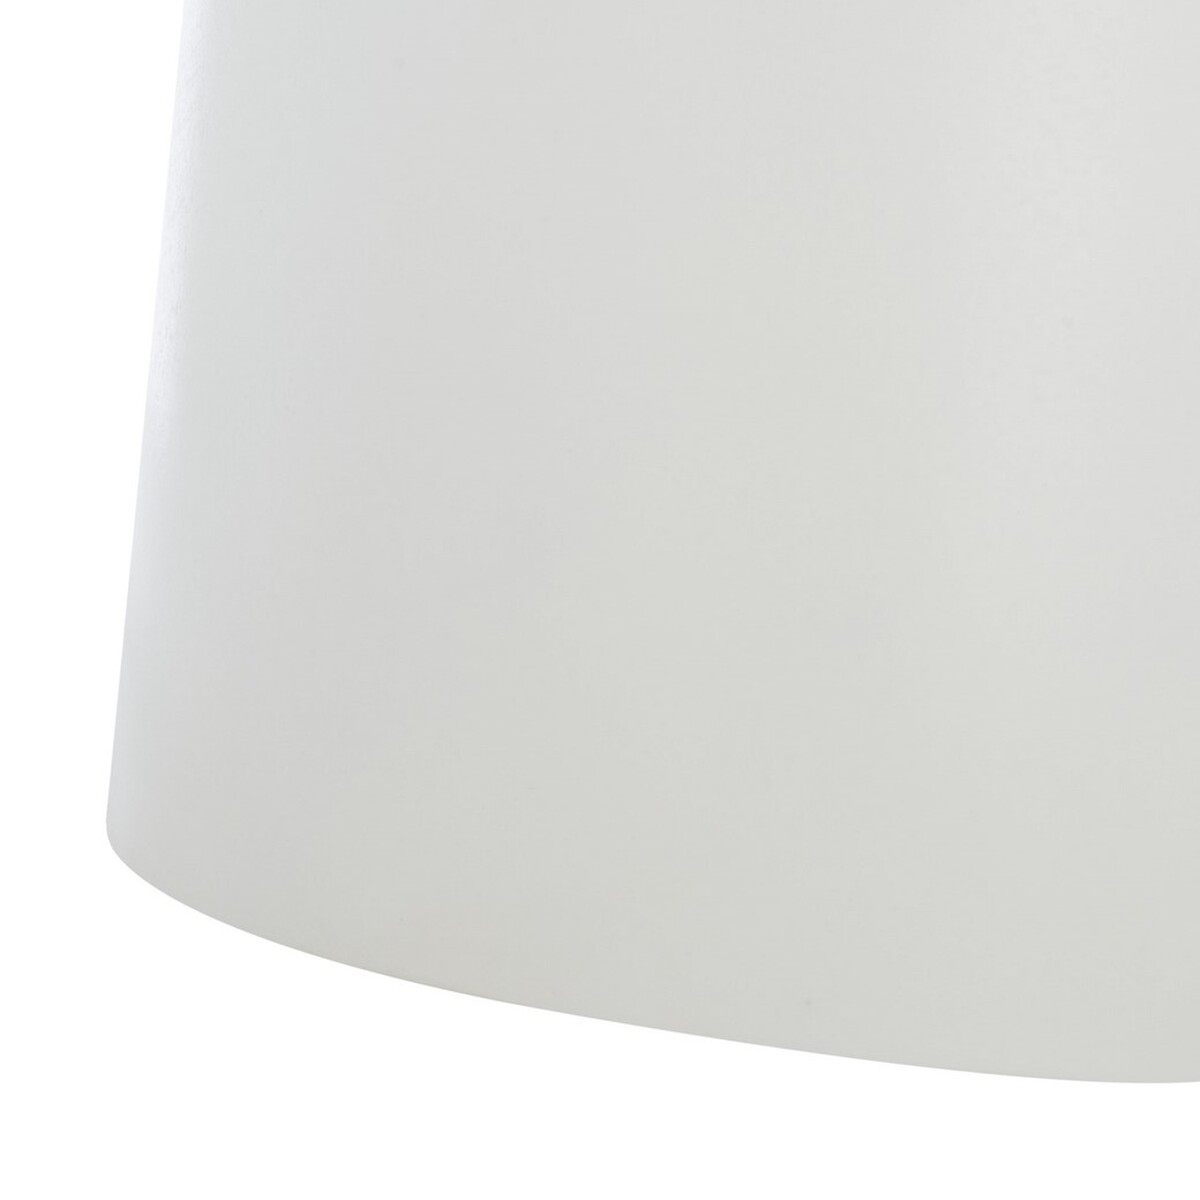 Jaria Paper Mache Coffee Table, White - Image 1